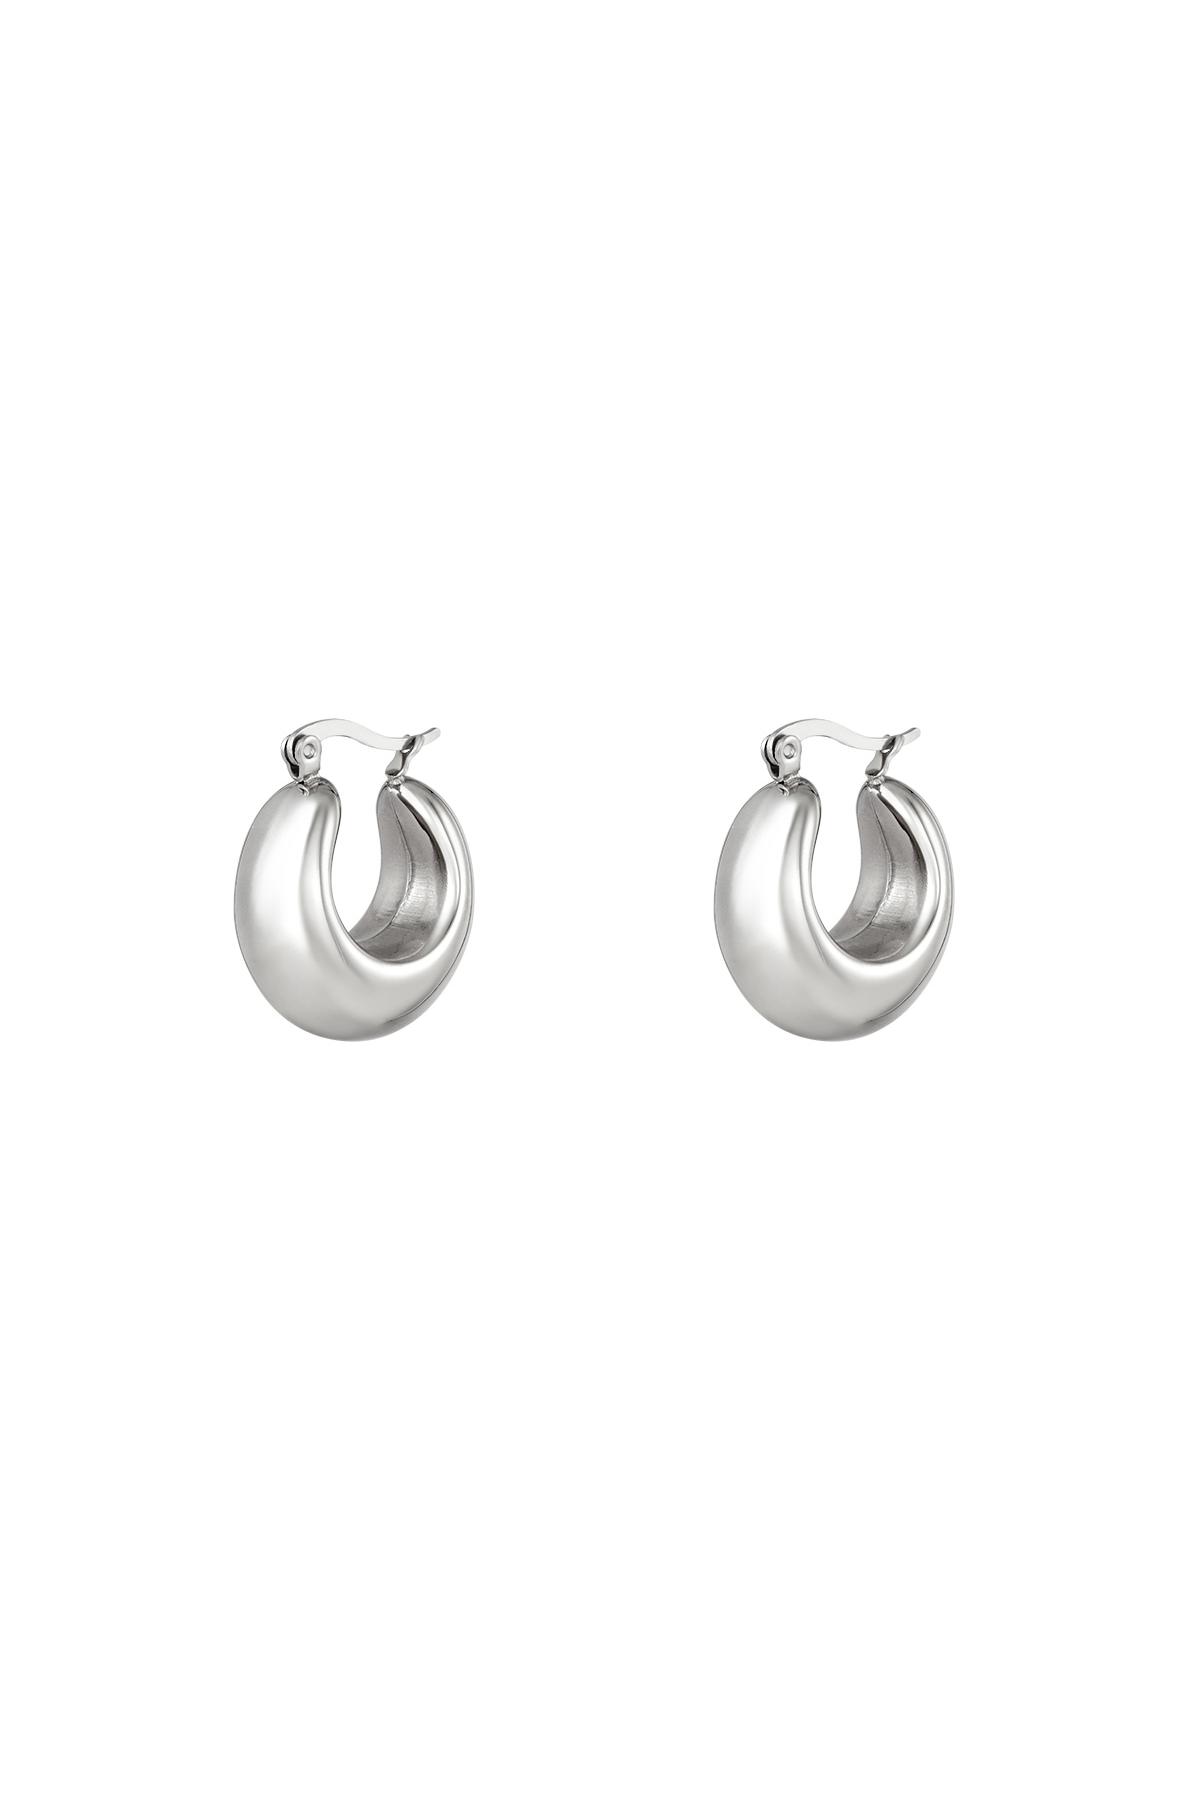 Bold hoop earrings small Silver Stainless Steel